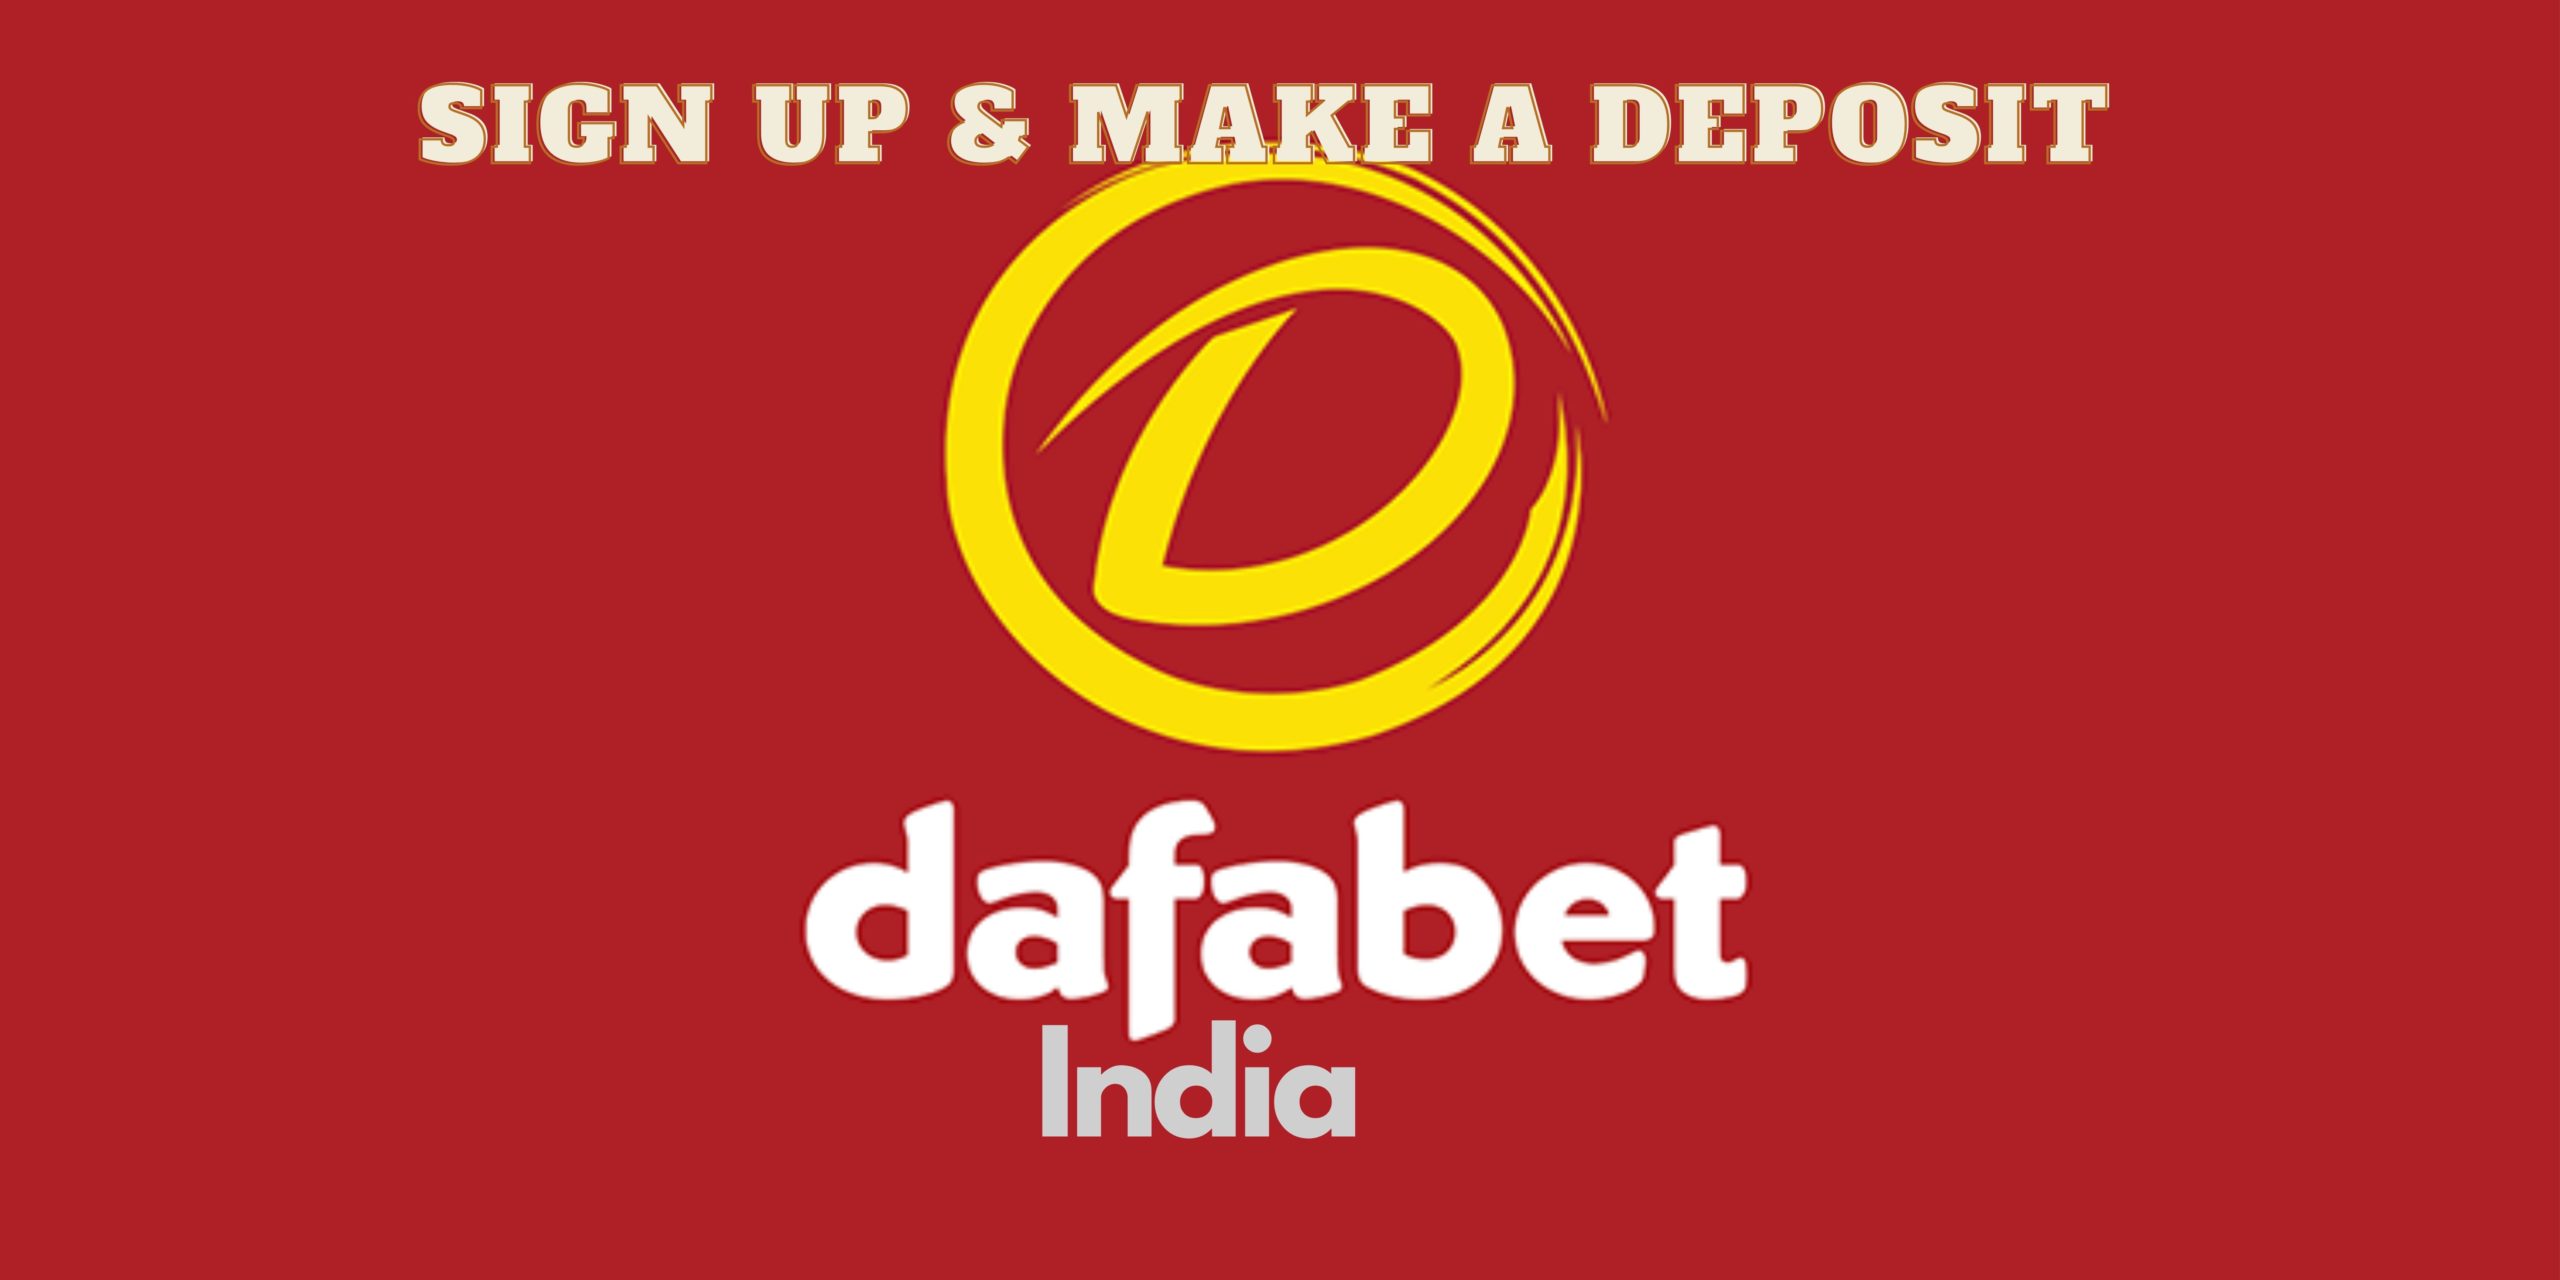 Dafabet India Sign up and Deposit Money